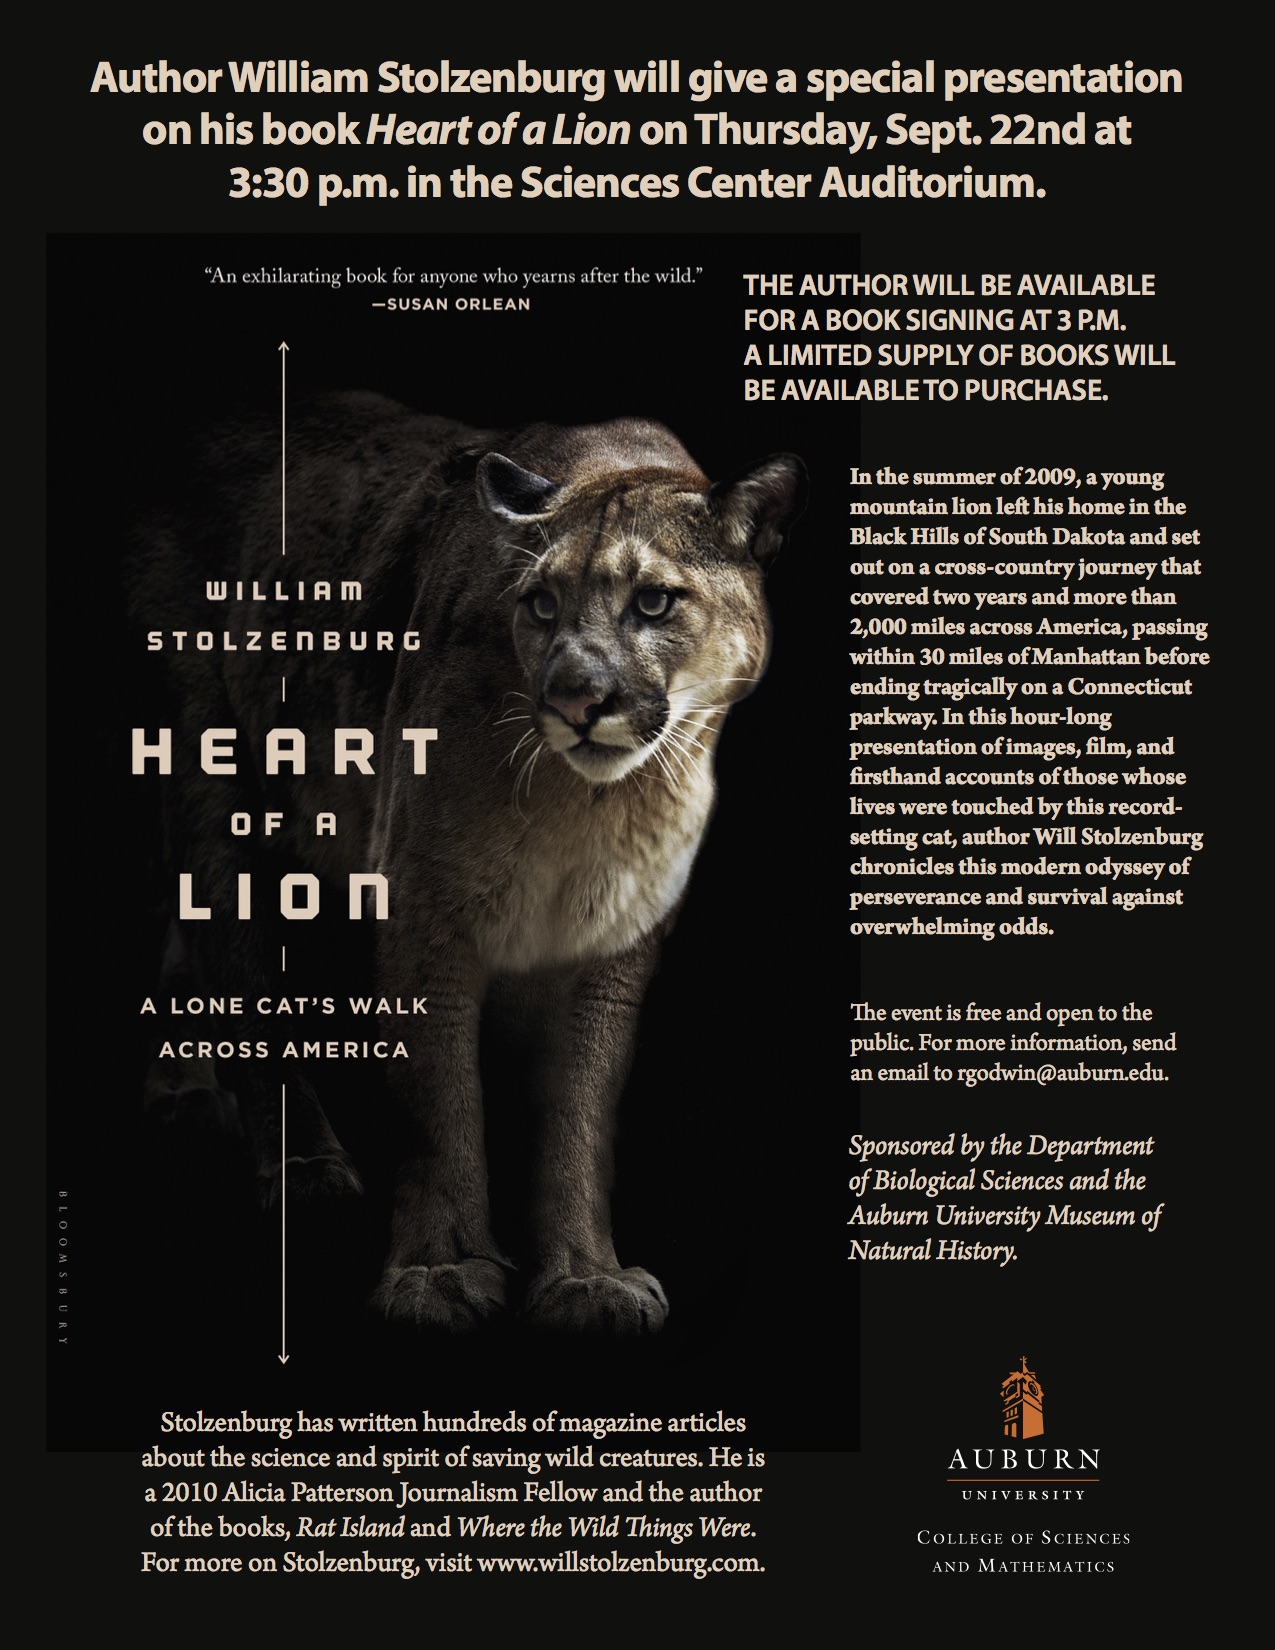 Heart of a Lion flyer